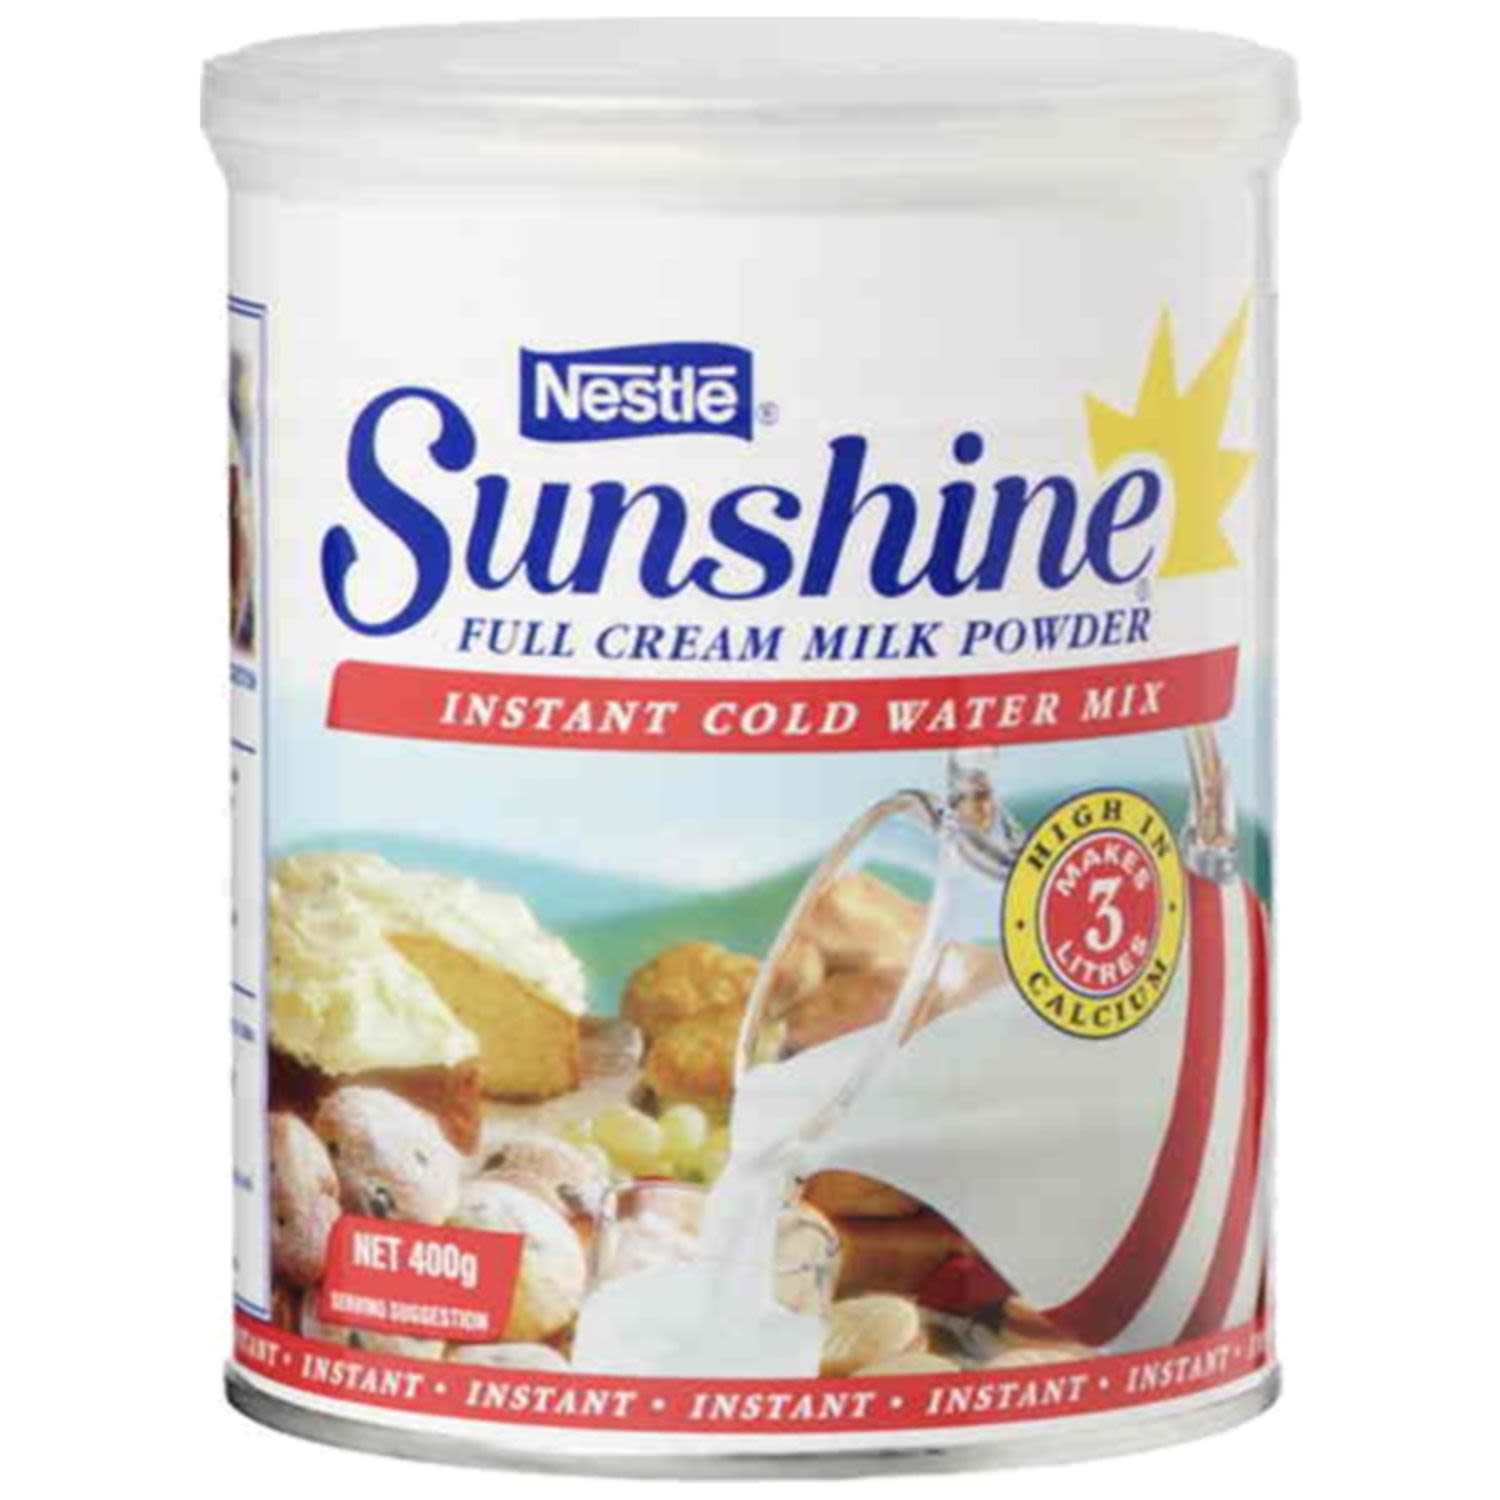 Nestlé Sunshine Milk Powder Full Cream, 400 Gram